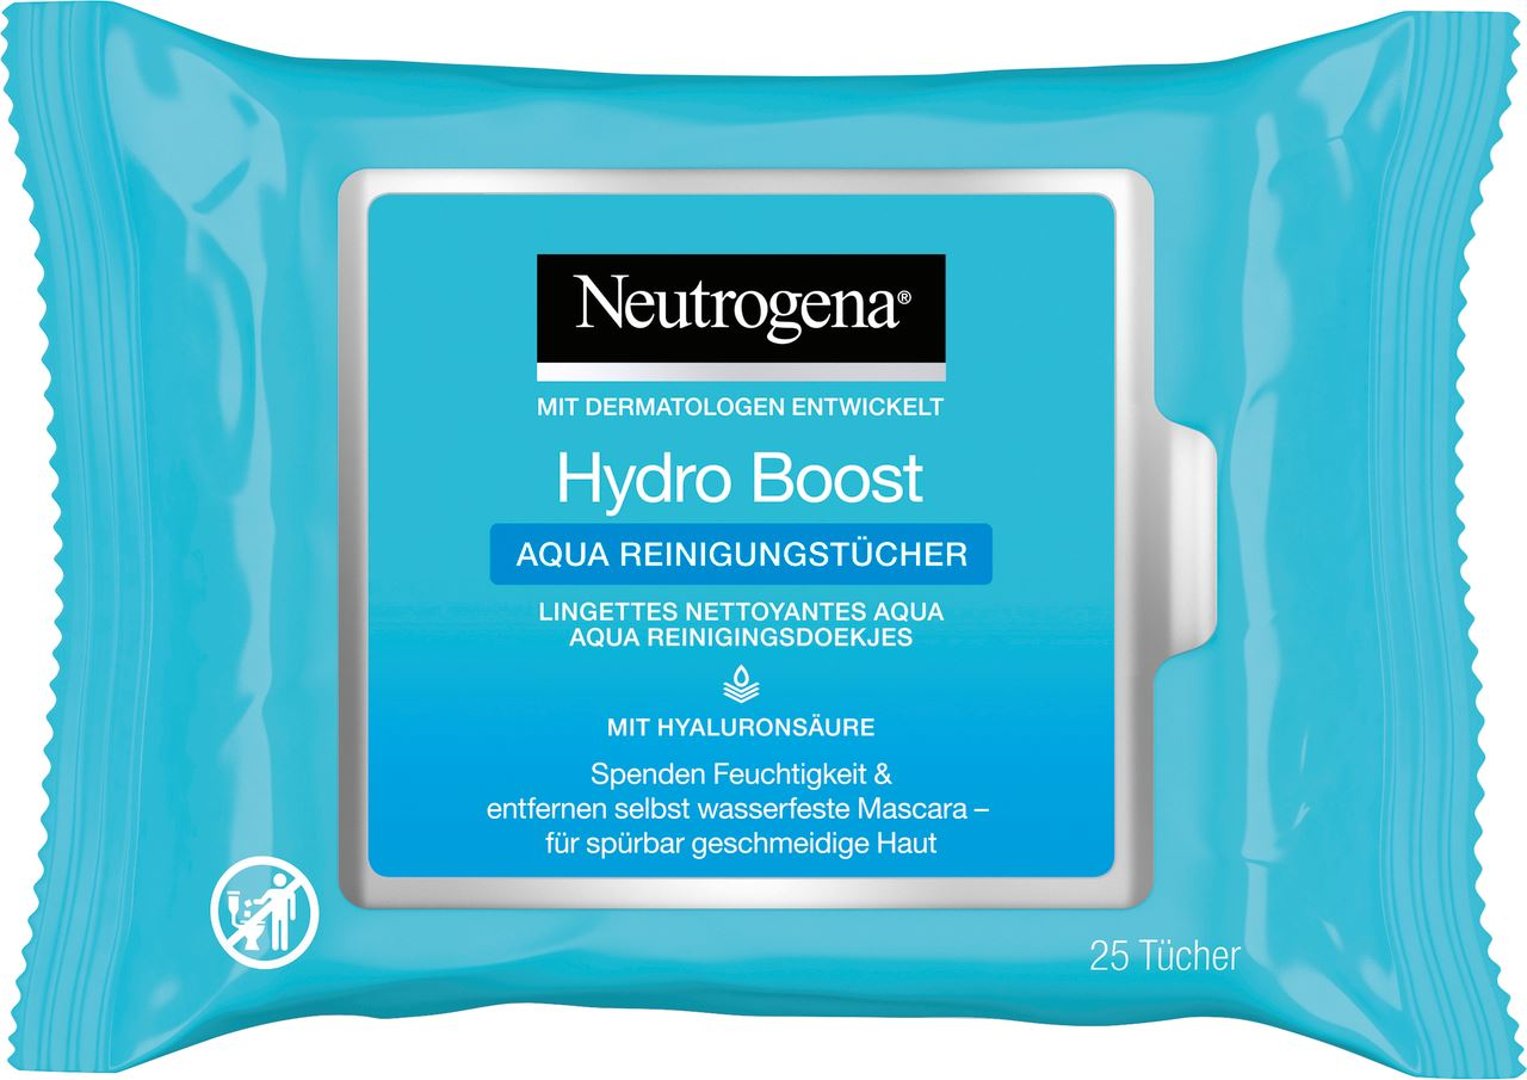 Neutrogena Hydro Boost Aqua Reinigungstücher, 25 Stück